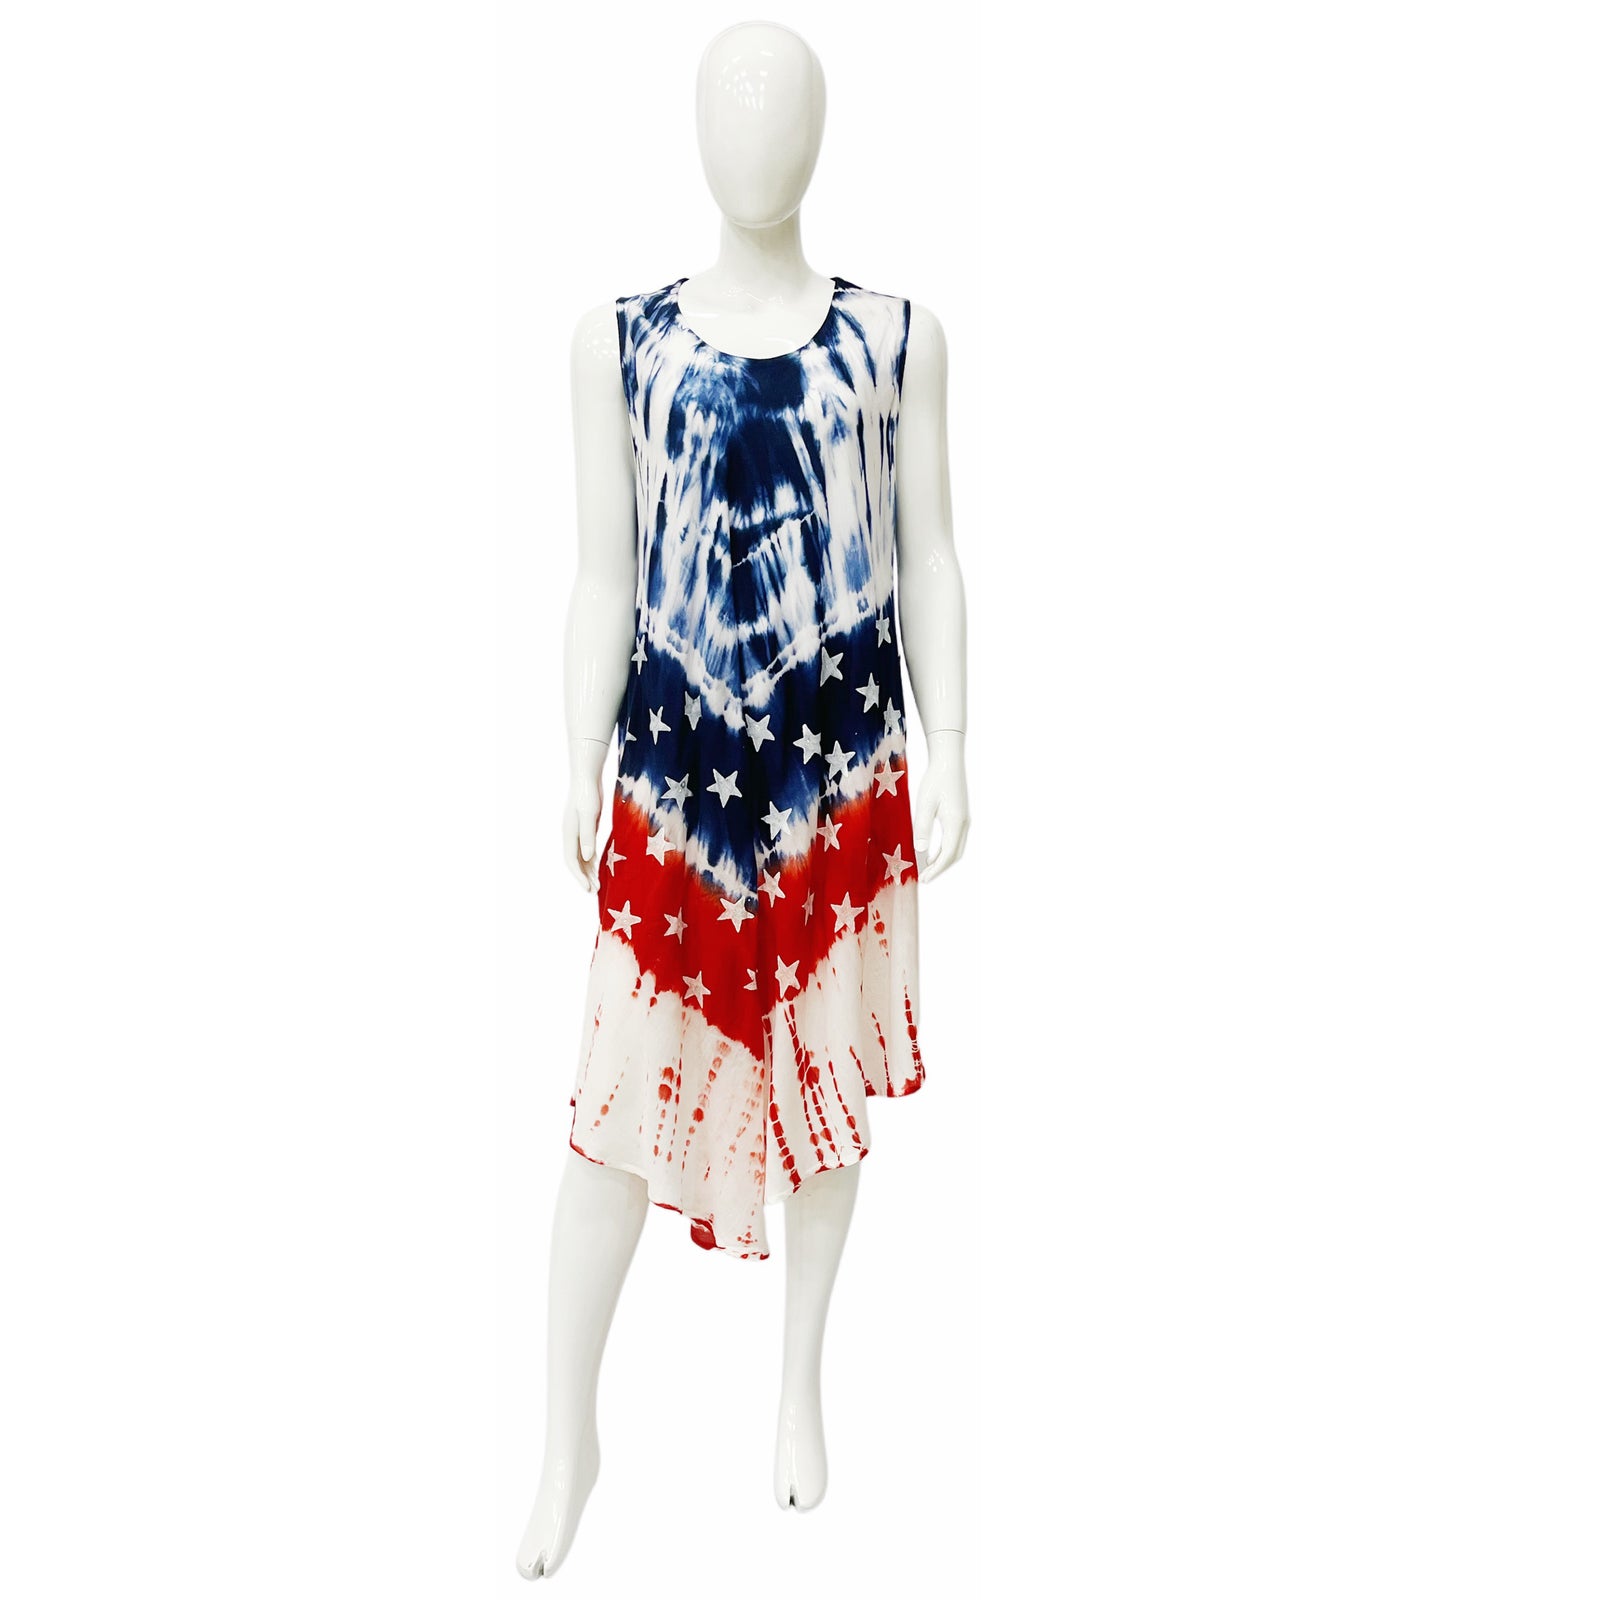 Wholesale Women's Dresses Rayon Staple American Flag Tie Dye with Block Paint Sl Umbrella 120Gms Oc Red-Blu-Wht 6-48-Case O-S Hadassah NWa5